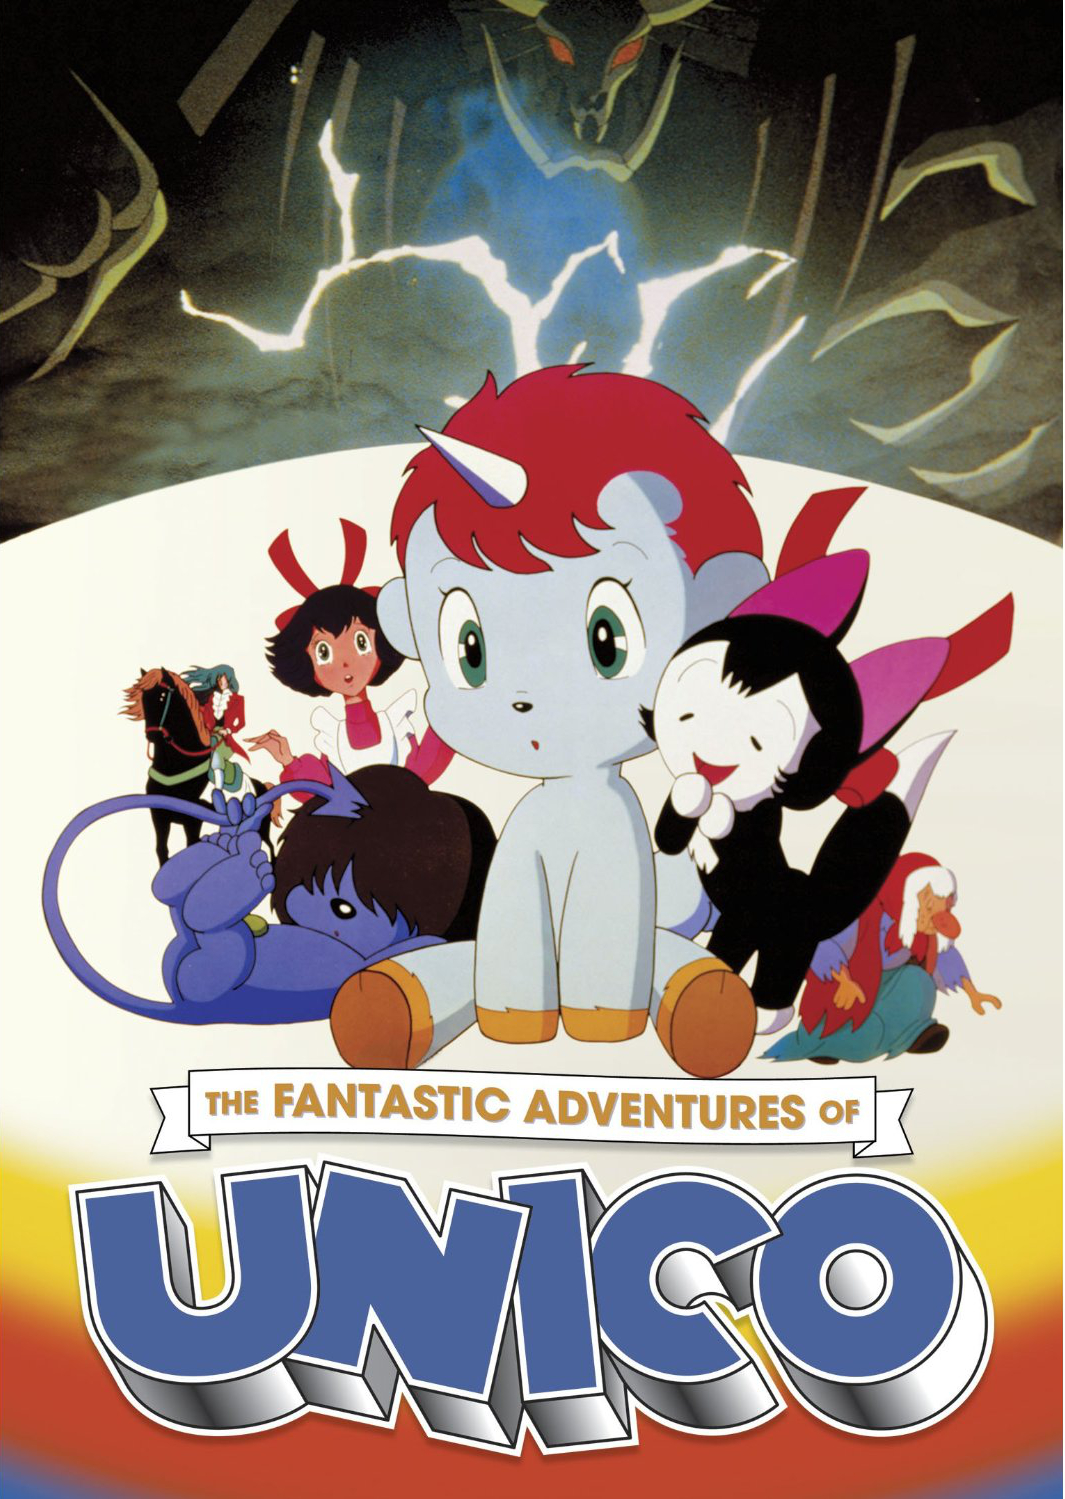 The Fantastic Adventures of Unico (Movie) | Osamu Tezuka Wiki | FANDOM